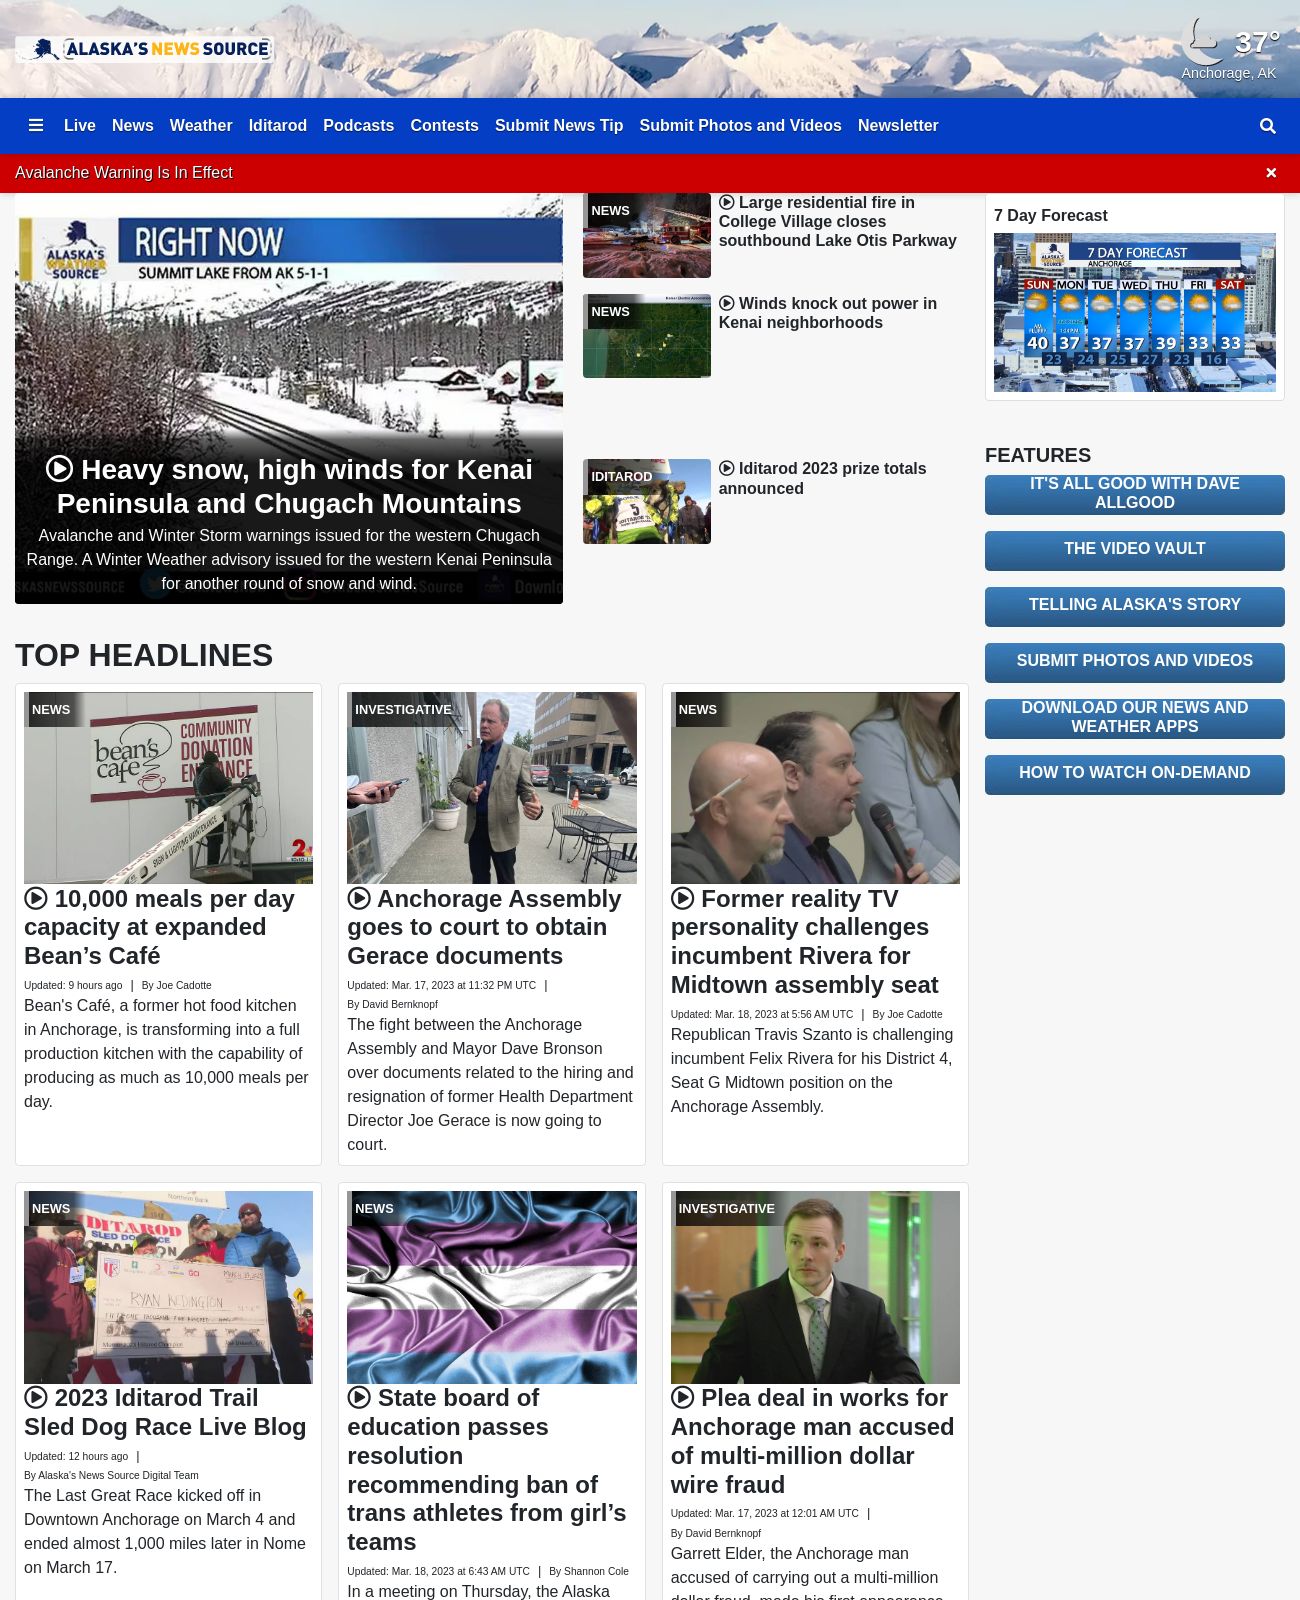 Alaskaâ€™s News Source at 2023-03-19 02:12:20-08:00 local time